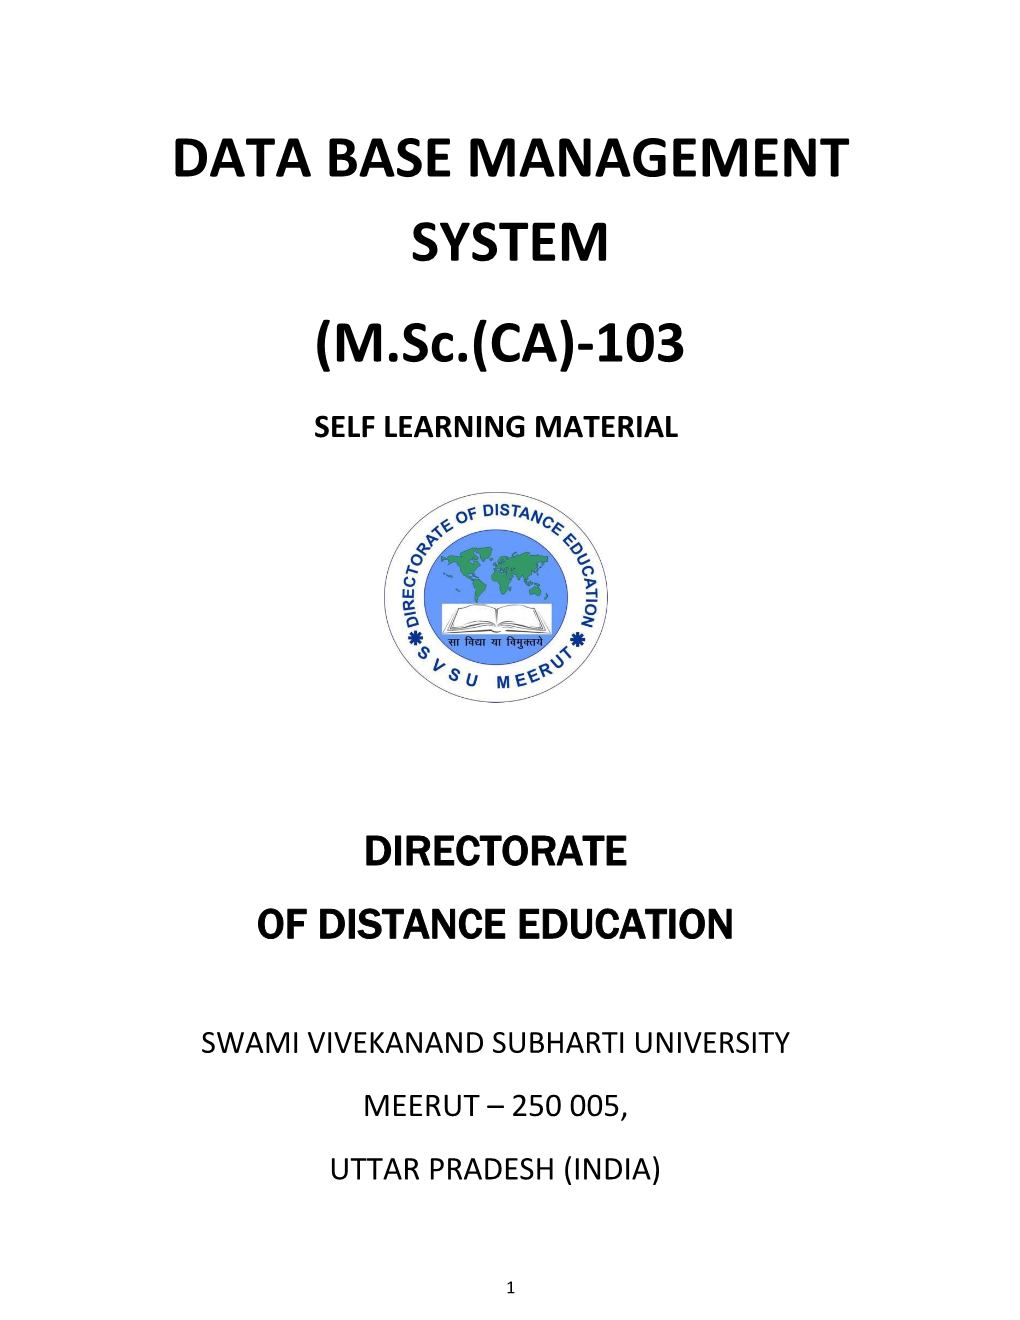 DATA BASE MANAGEMENT SYSTEM (M.Sc.(CA)-103